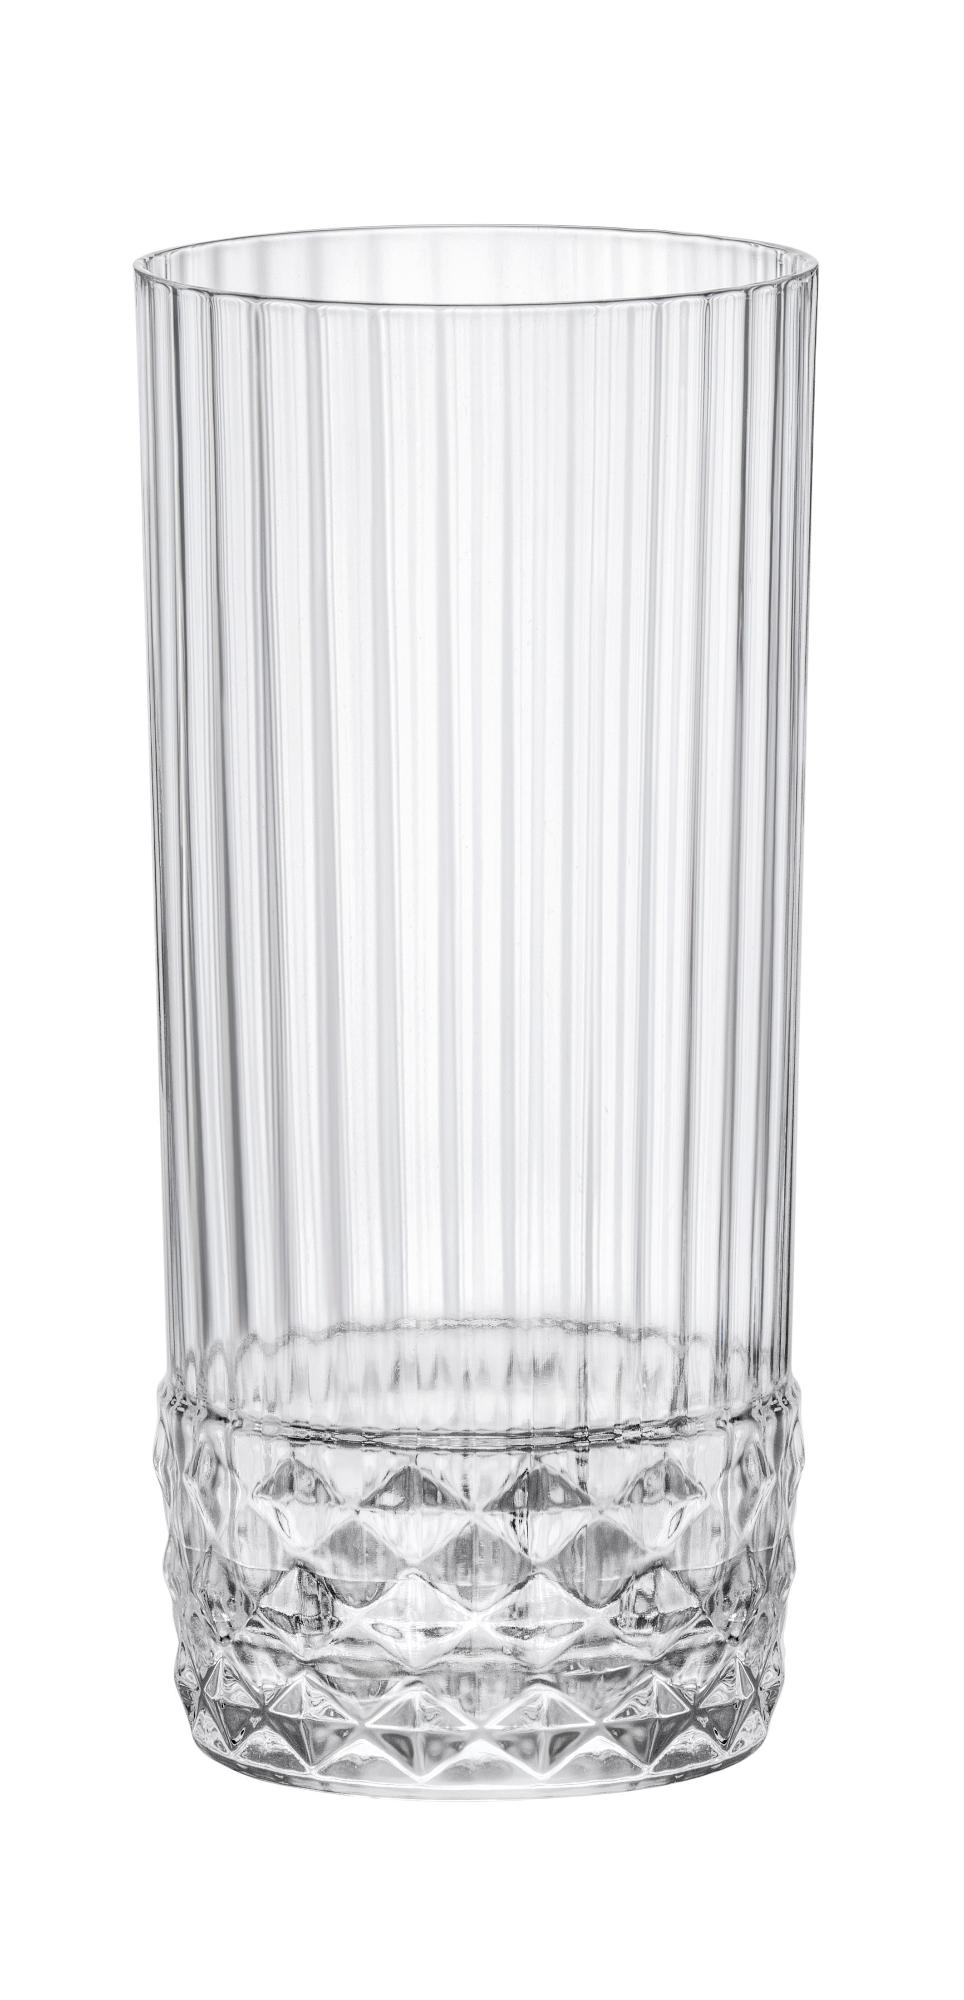 America'20s highball glass, 490 ml